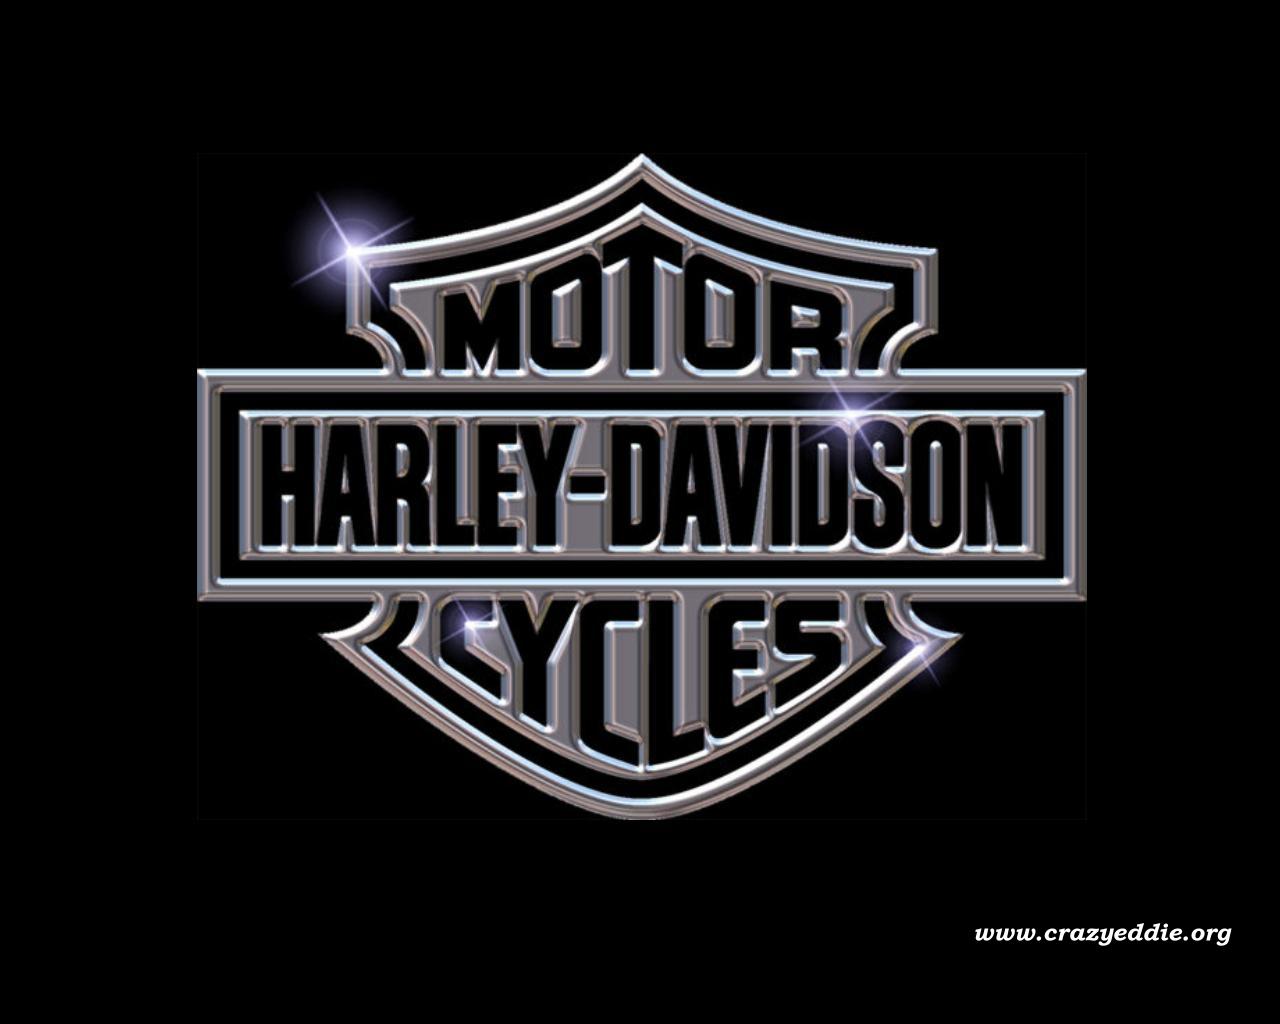 harley davidson, vehicles, harley davidson logo, logo